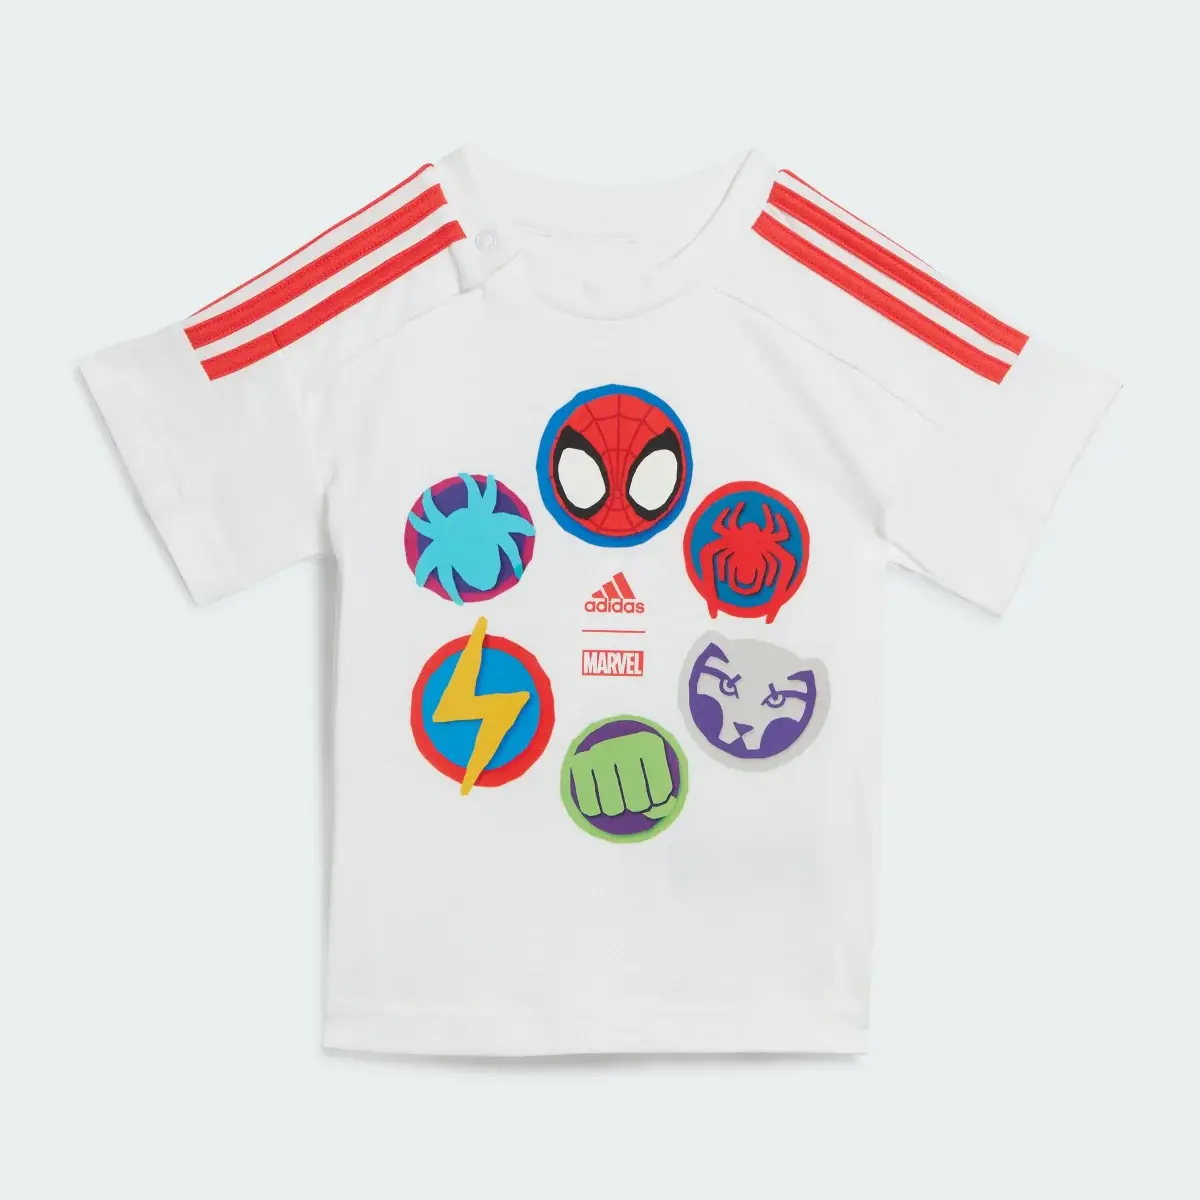 Adidas x Marvel Spider-Man Tişört ve Şort Takımı. 3